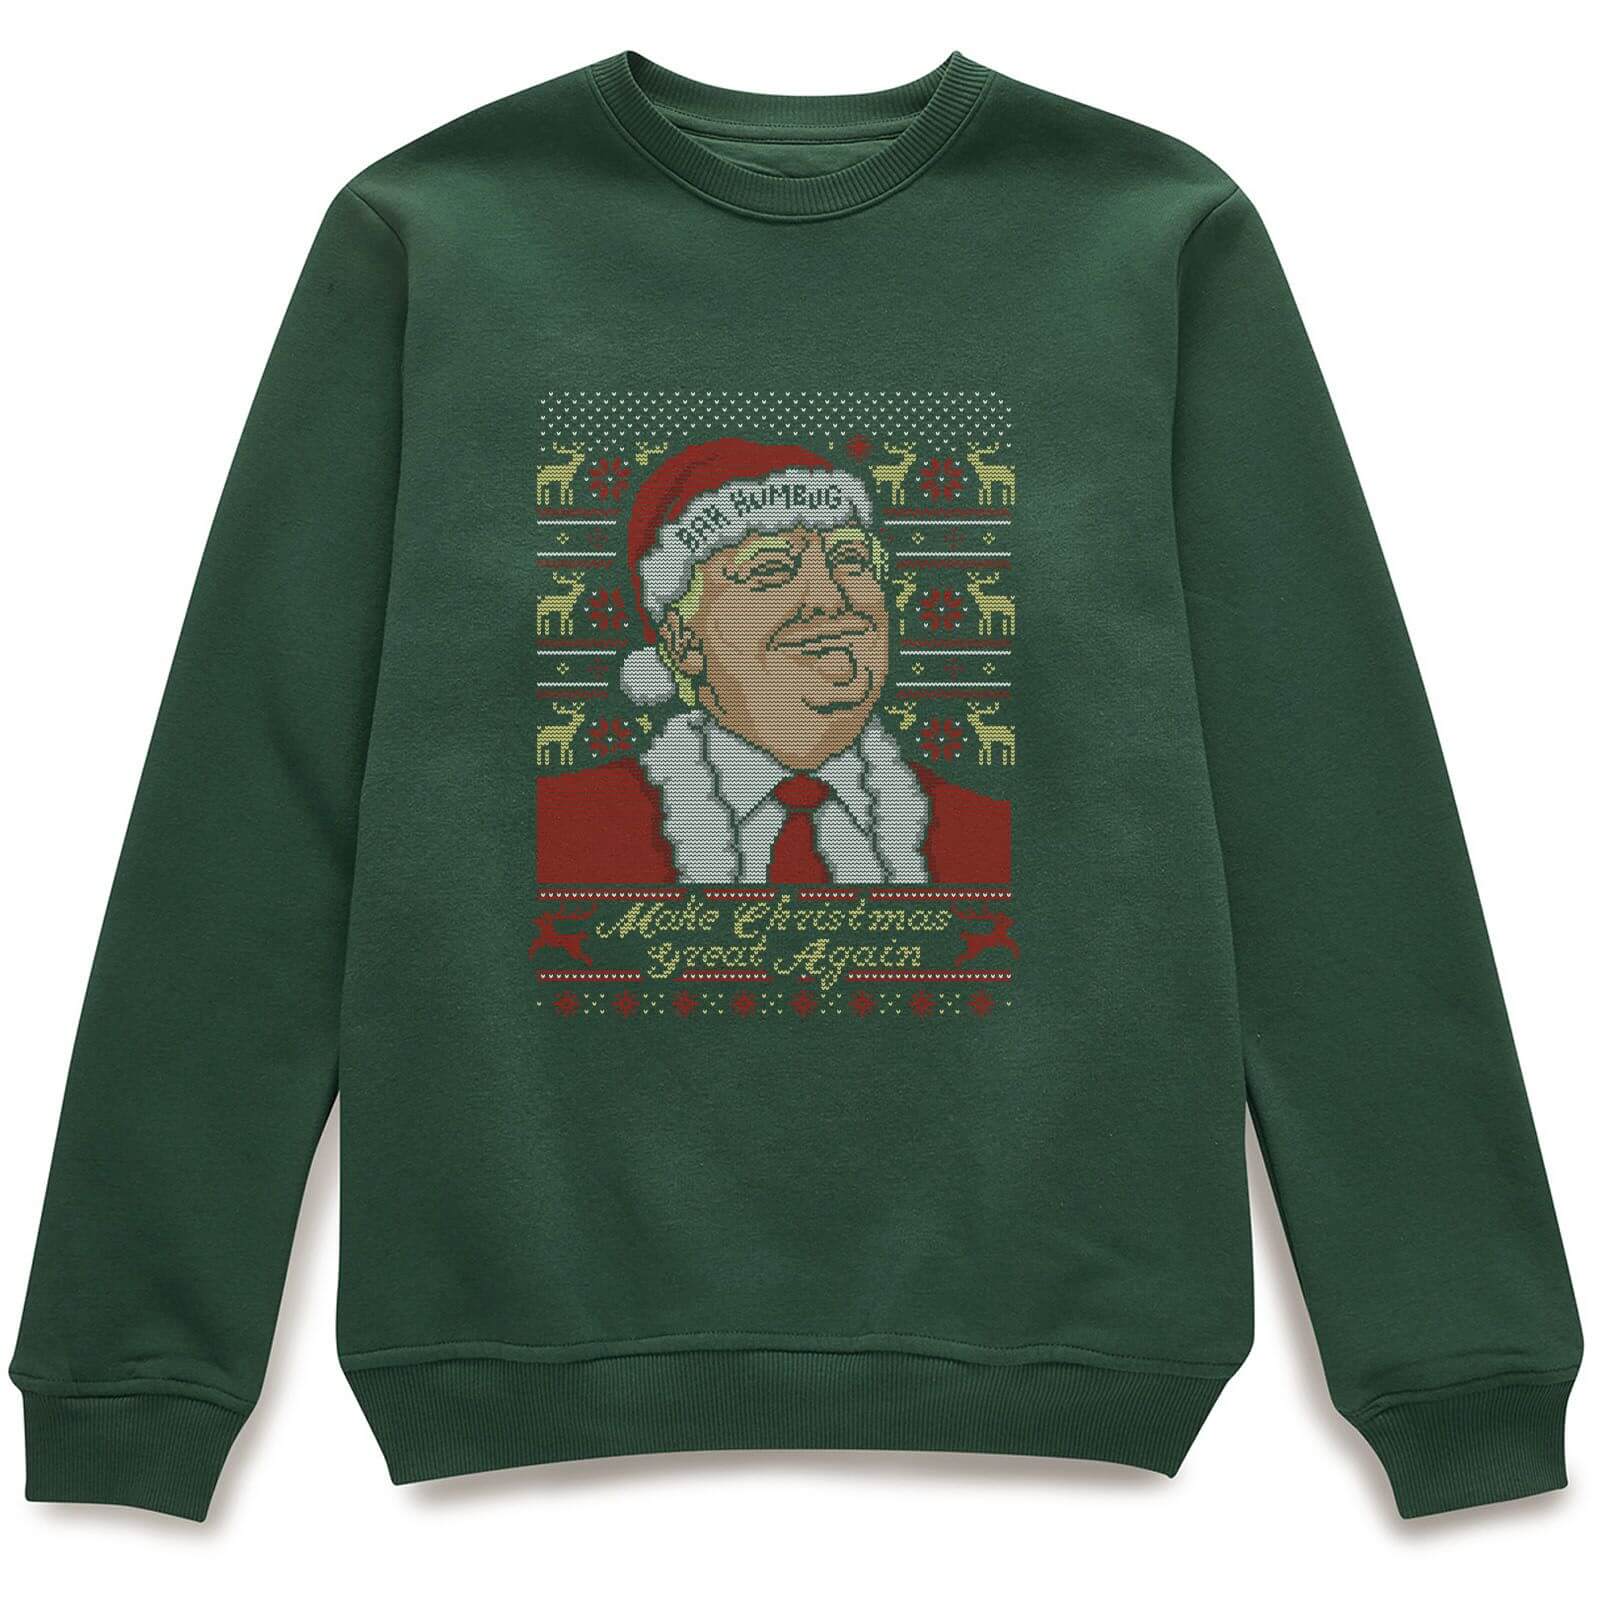 Make Christmas Great Again Men's Green Christmas Sweatshirt - L - Green